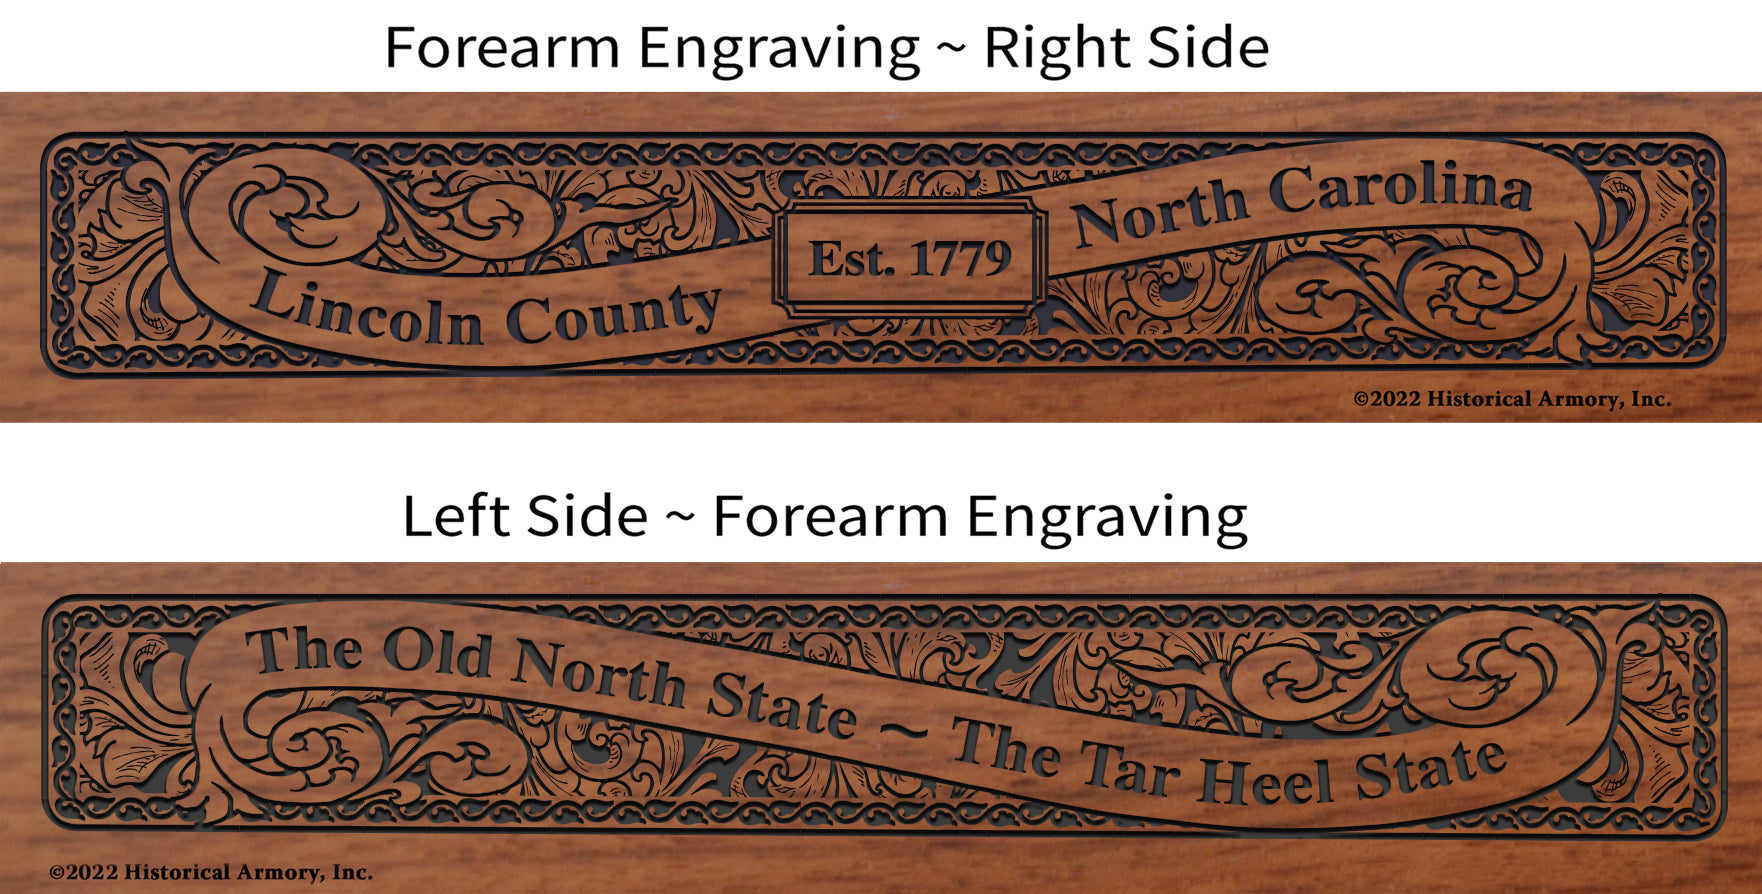 Lincoln County North Carolina Engraved Rifle Forearm